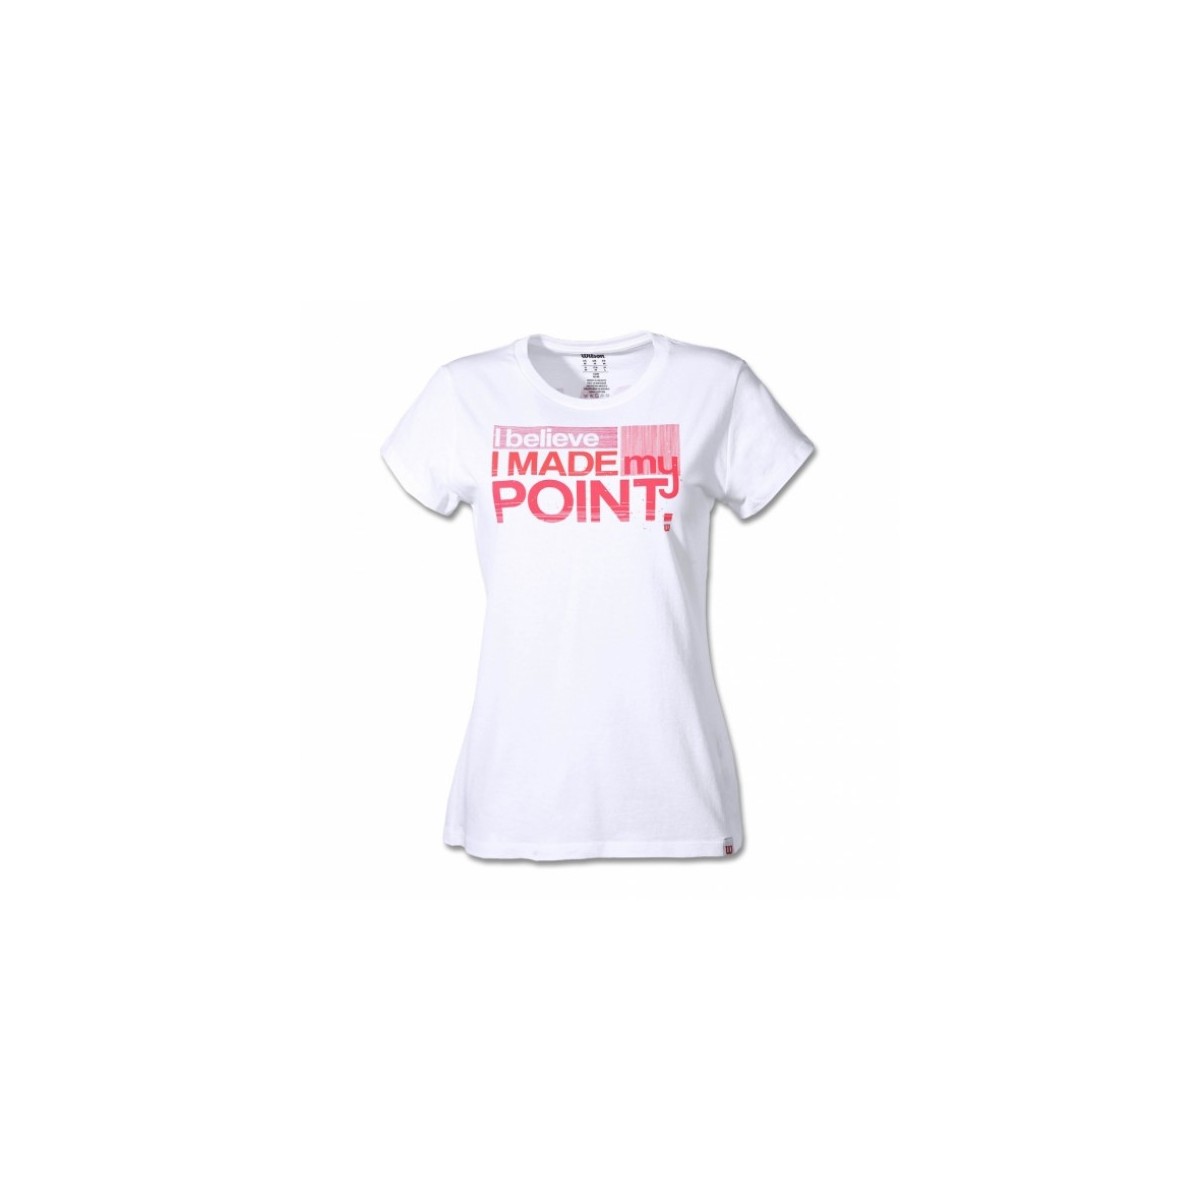 T-shirt Wilson femme "Made my point" - Blanc 